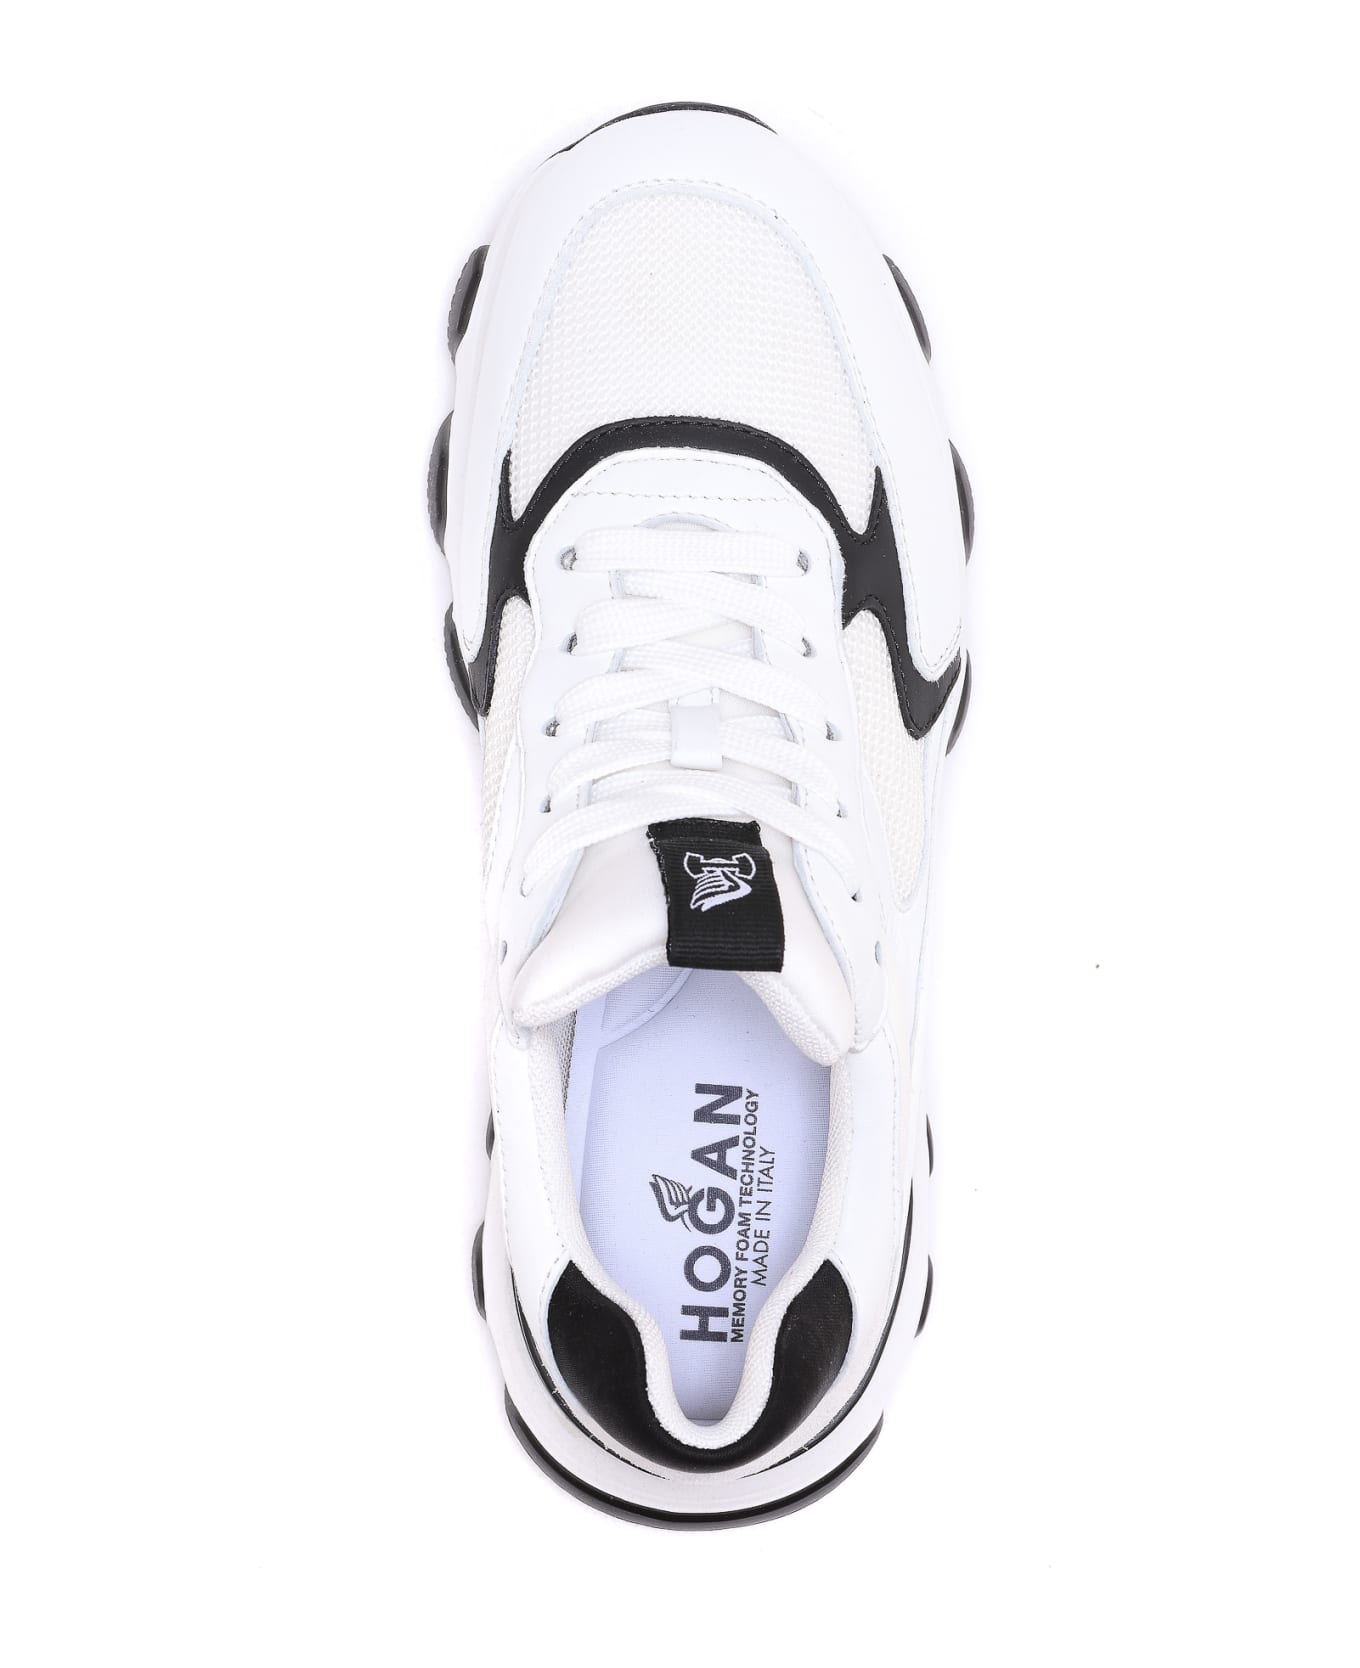 Hogan Hyperactive Sneakers - White